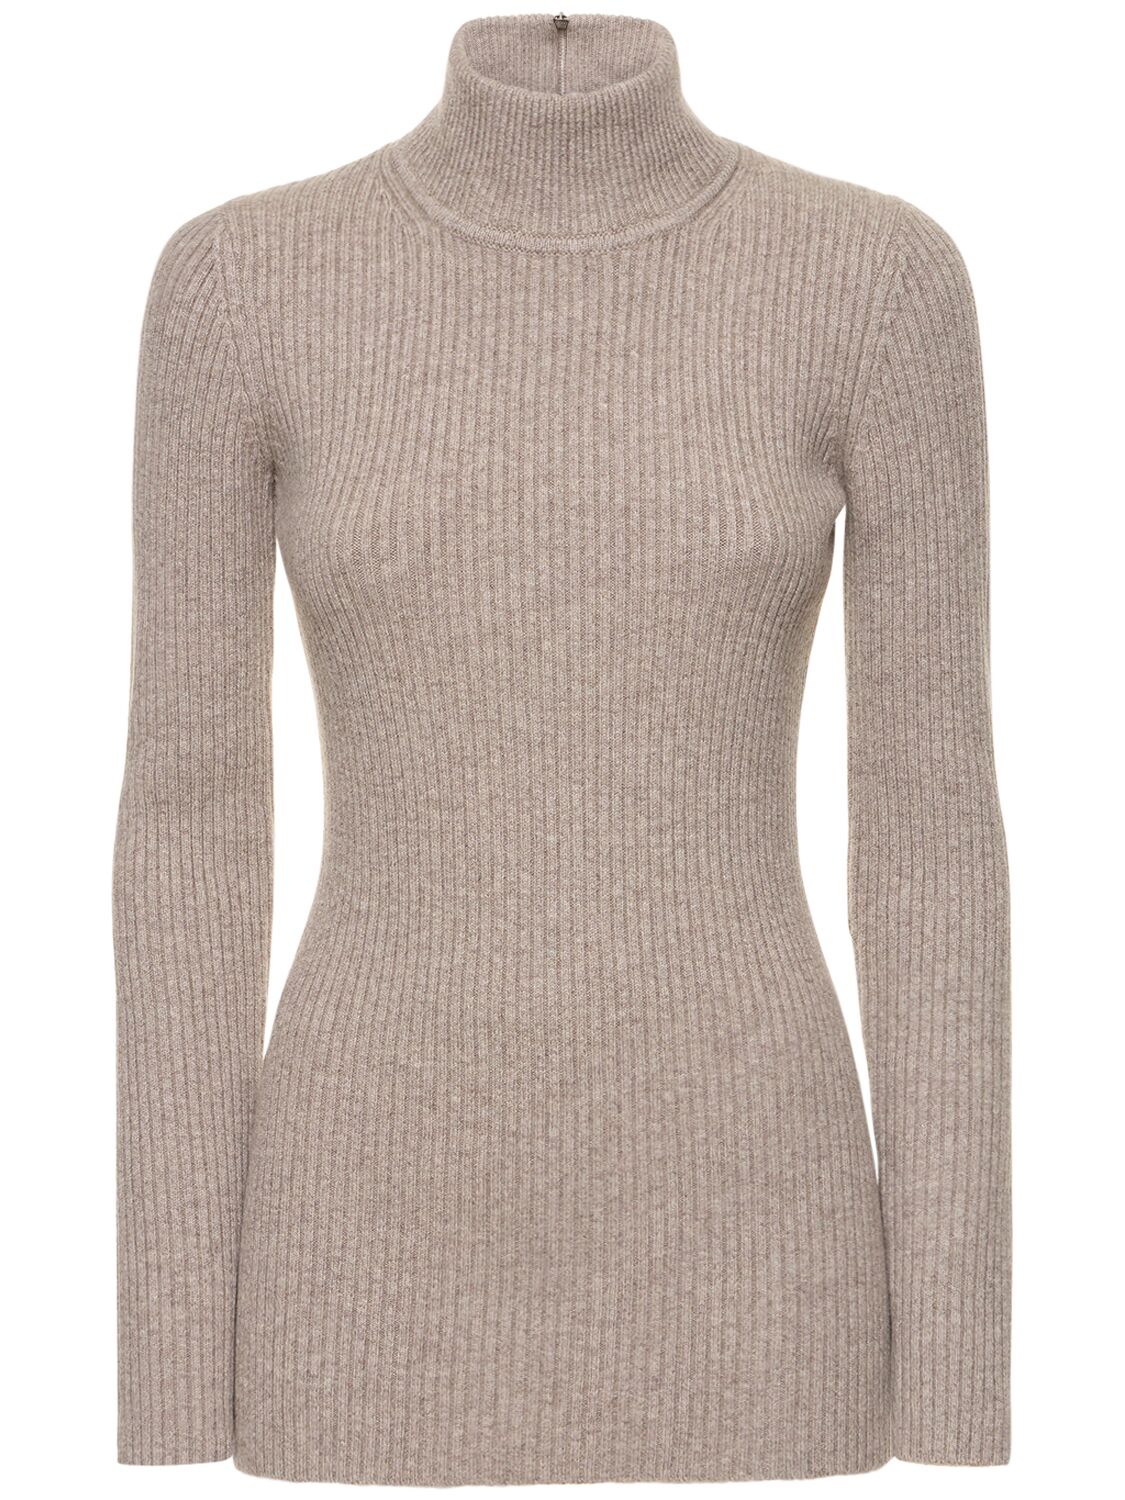 Image of Cashmere Blend Knit Turtleneck Sweater